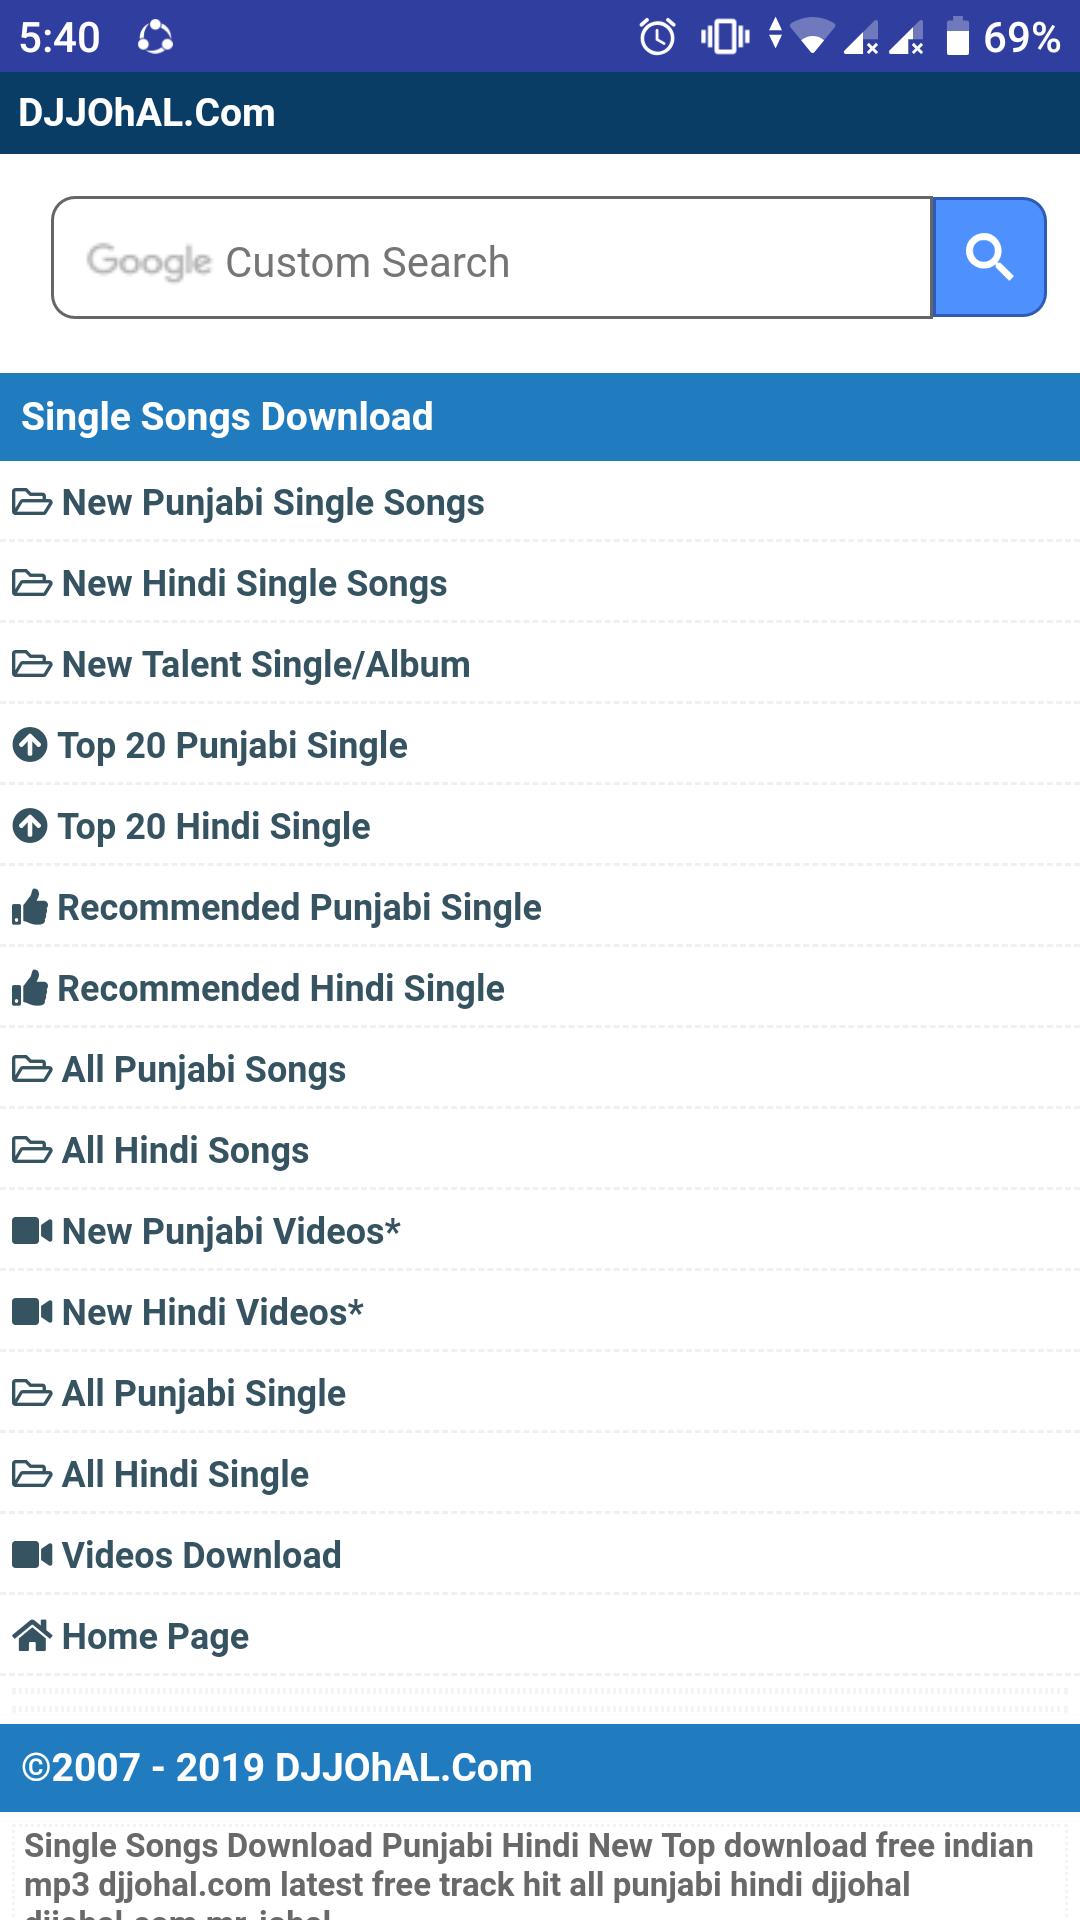 Djjohal (Latest Punjabi & Hindi Songs) for Android - APK Download